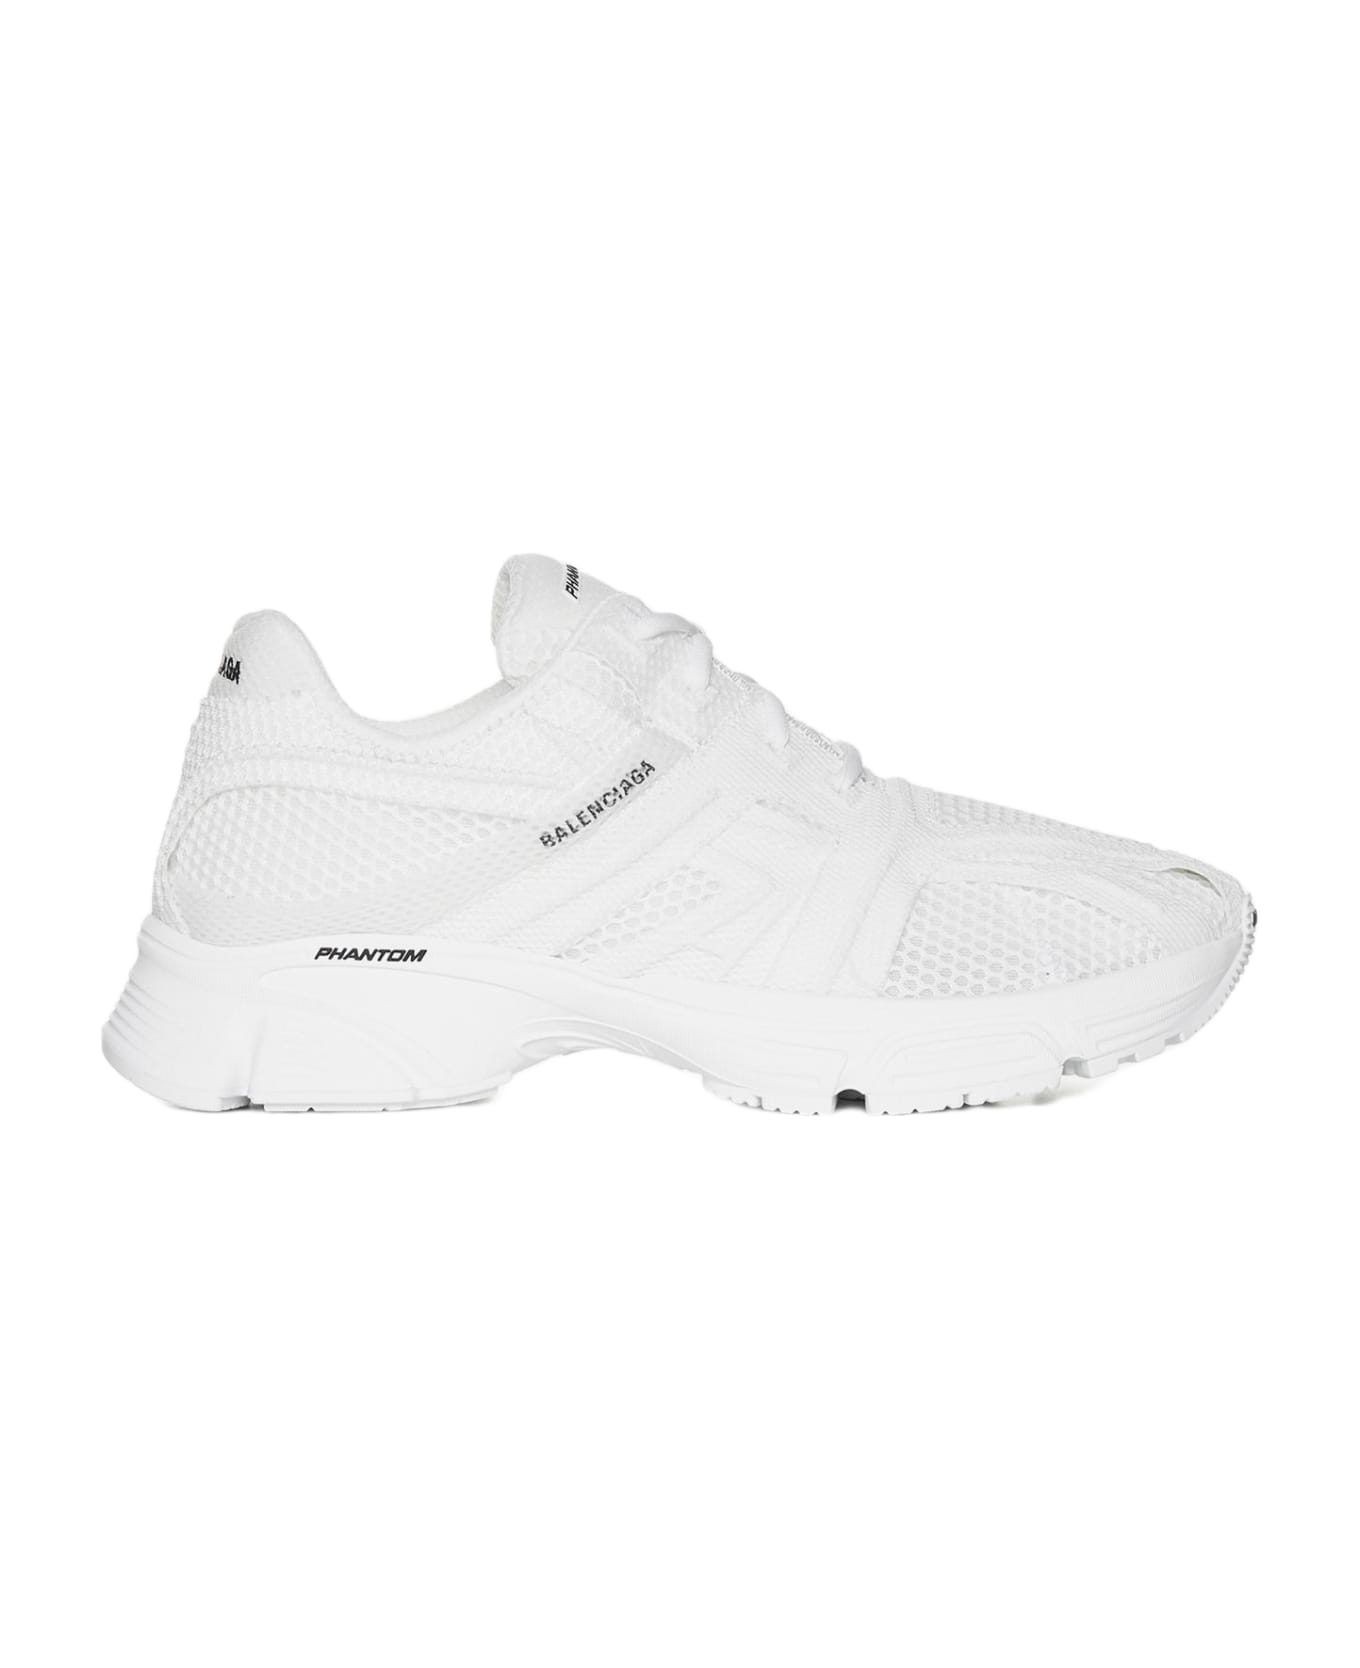 Balenciaga Phantom Mesh Sneakers - WHITE